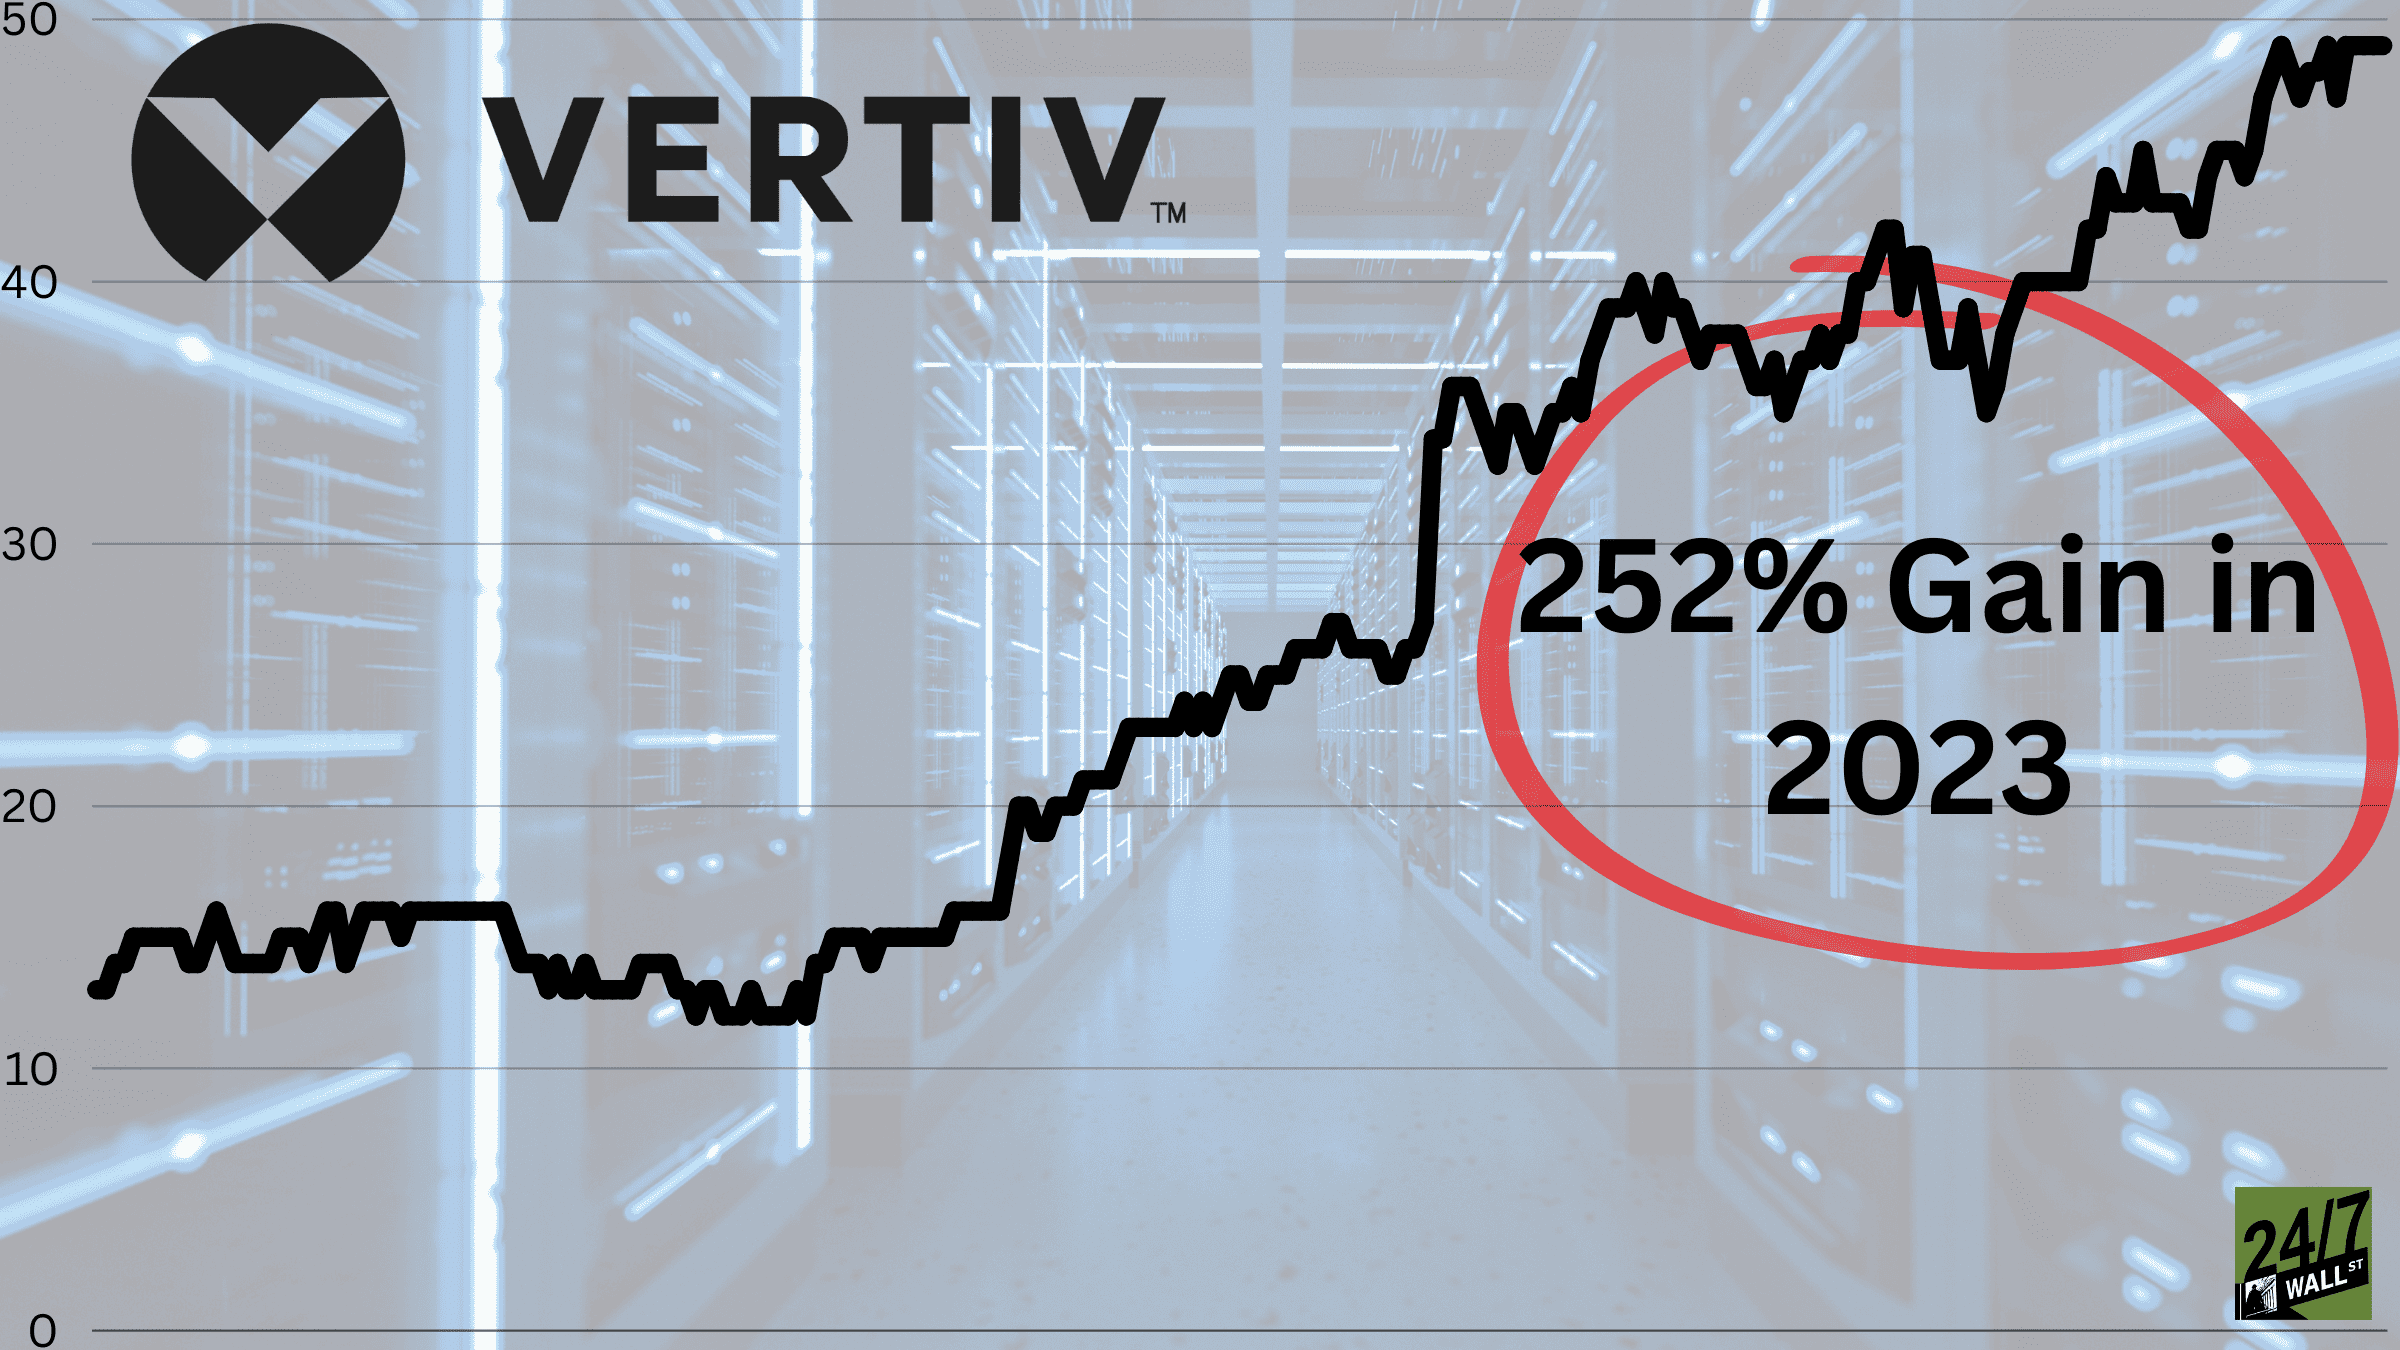 Vertiv Stock Chart Performance in 2023